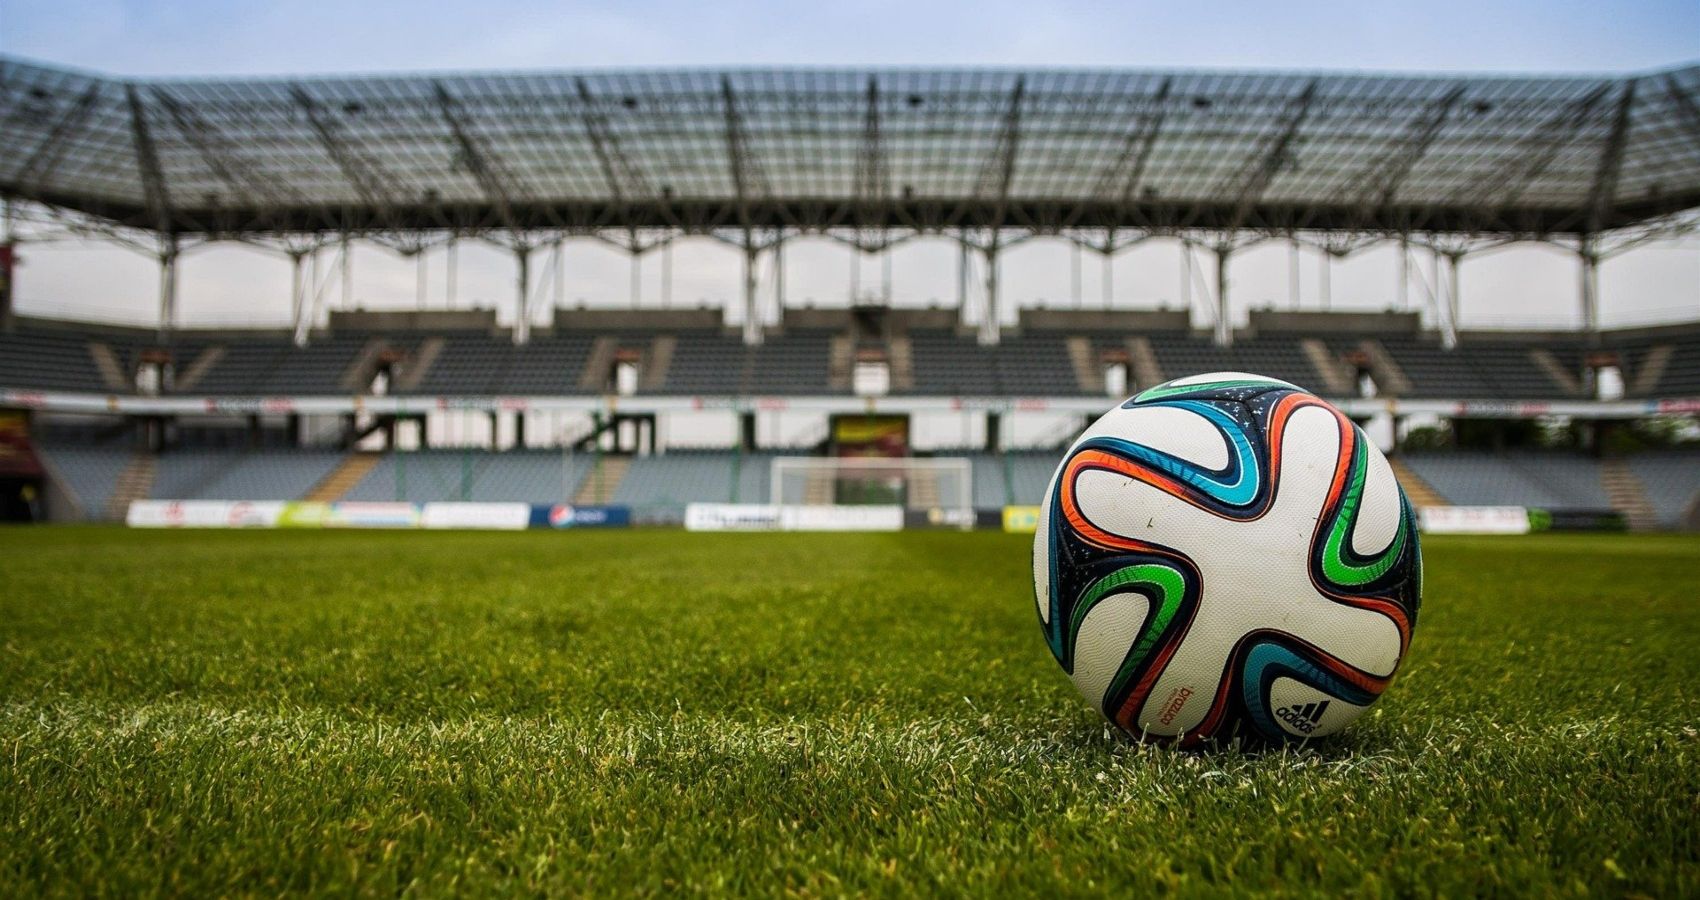 Soccer Ball on a Field - Pixabay